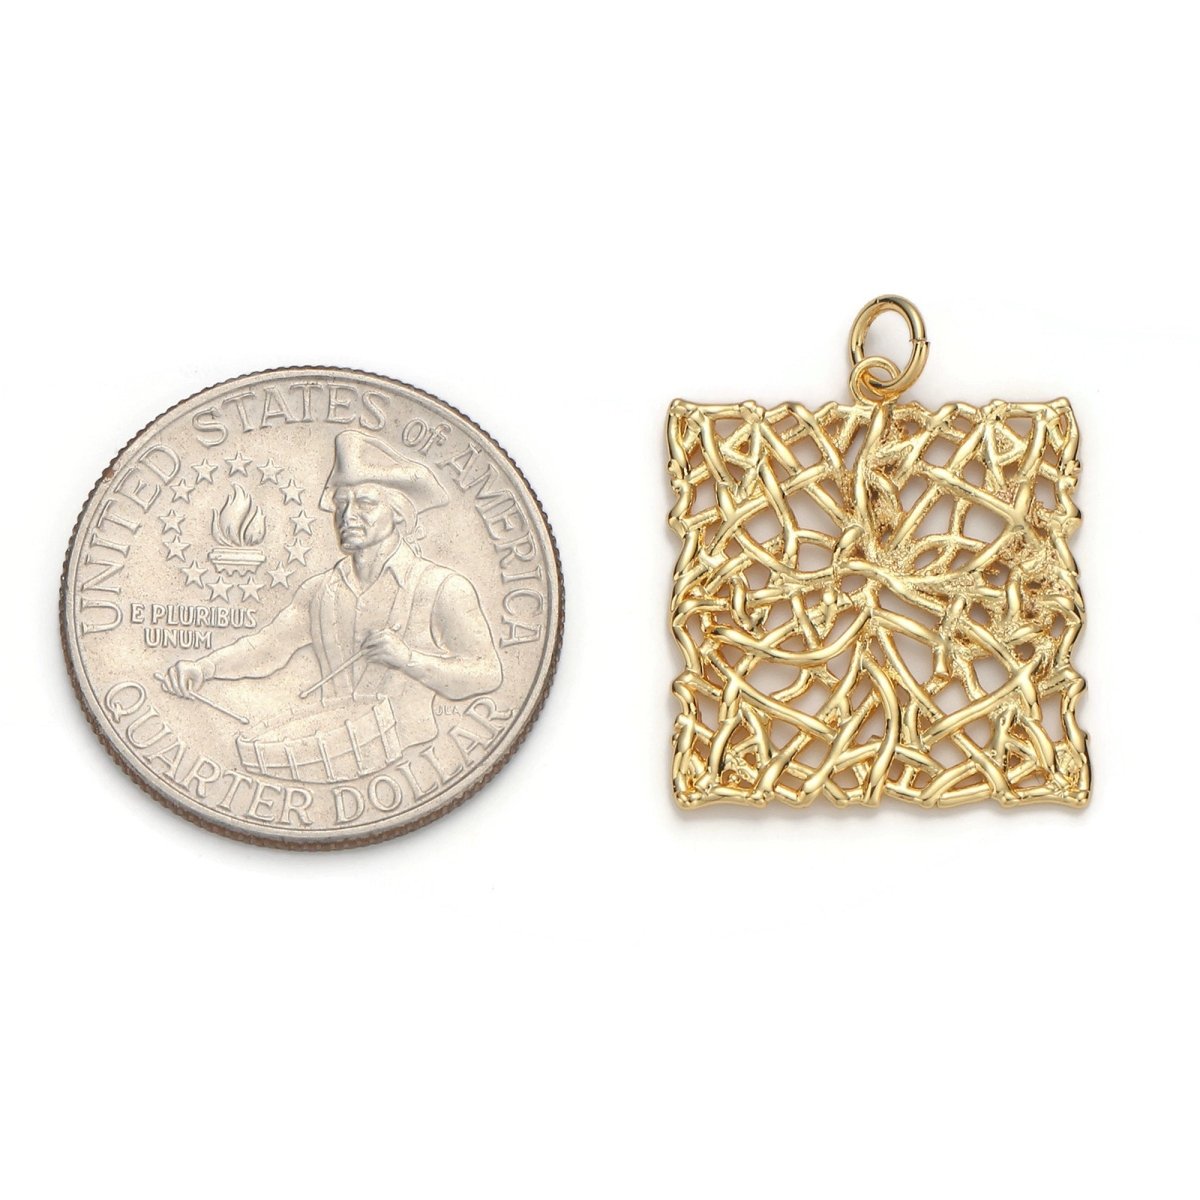 24k Gold Filled Patterned Square Charm, Branch Paisley Pendant Charm, Gold Filled Charm, For DIY Jewelry, Gold Color D-054 - DLUXCA